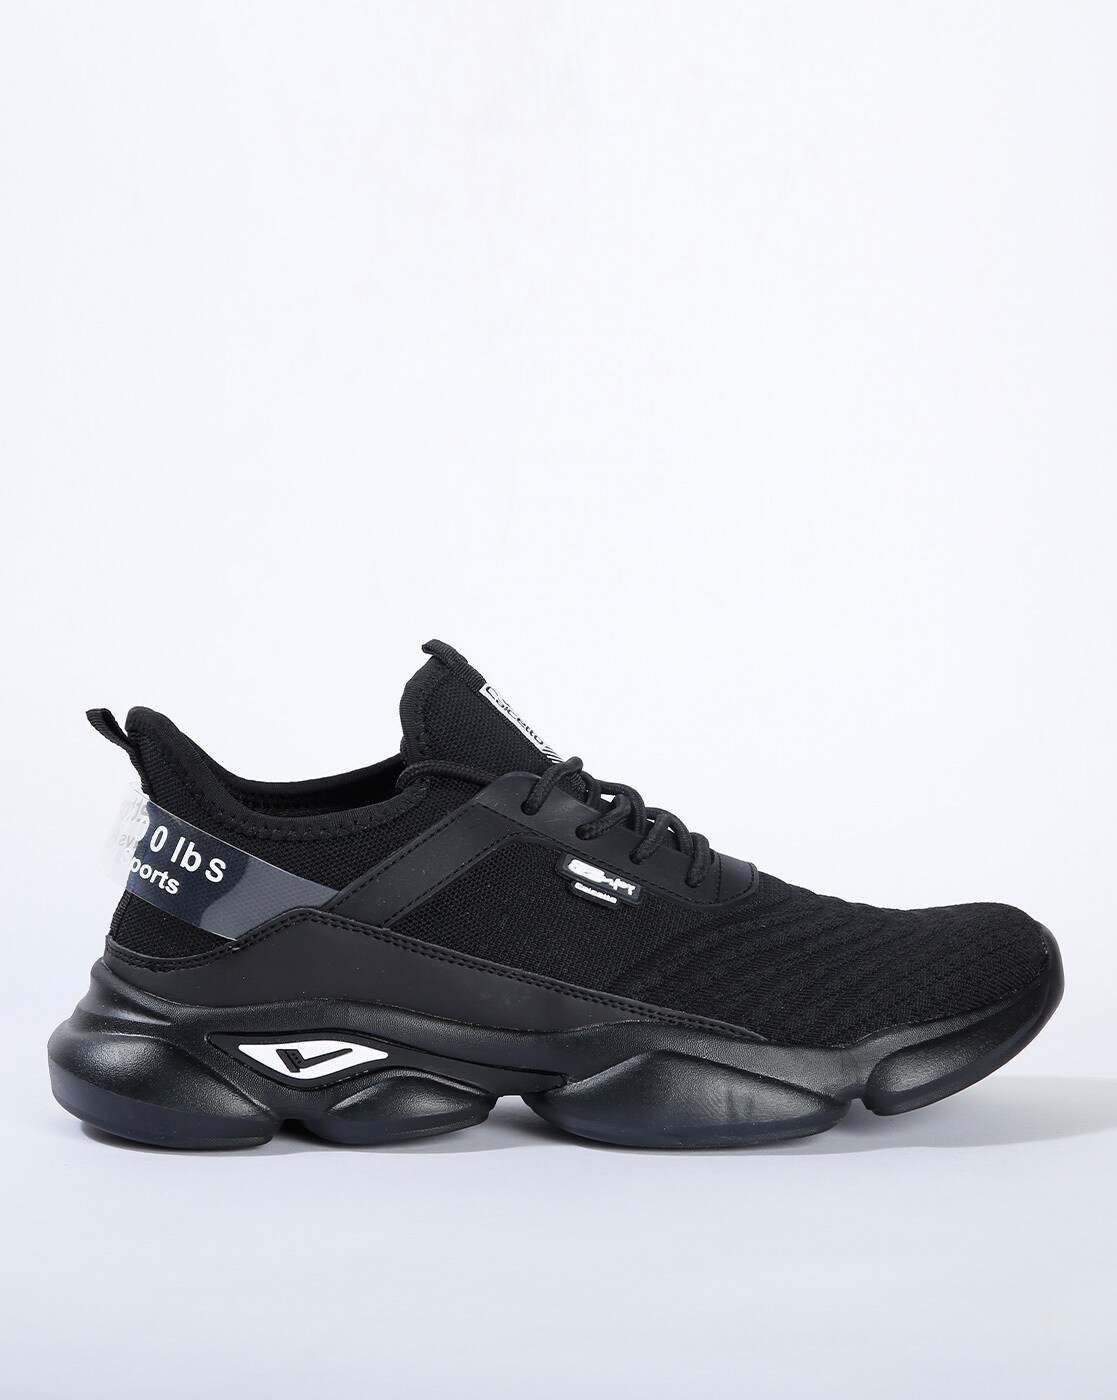 calcetto shoes black price